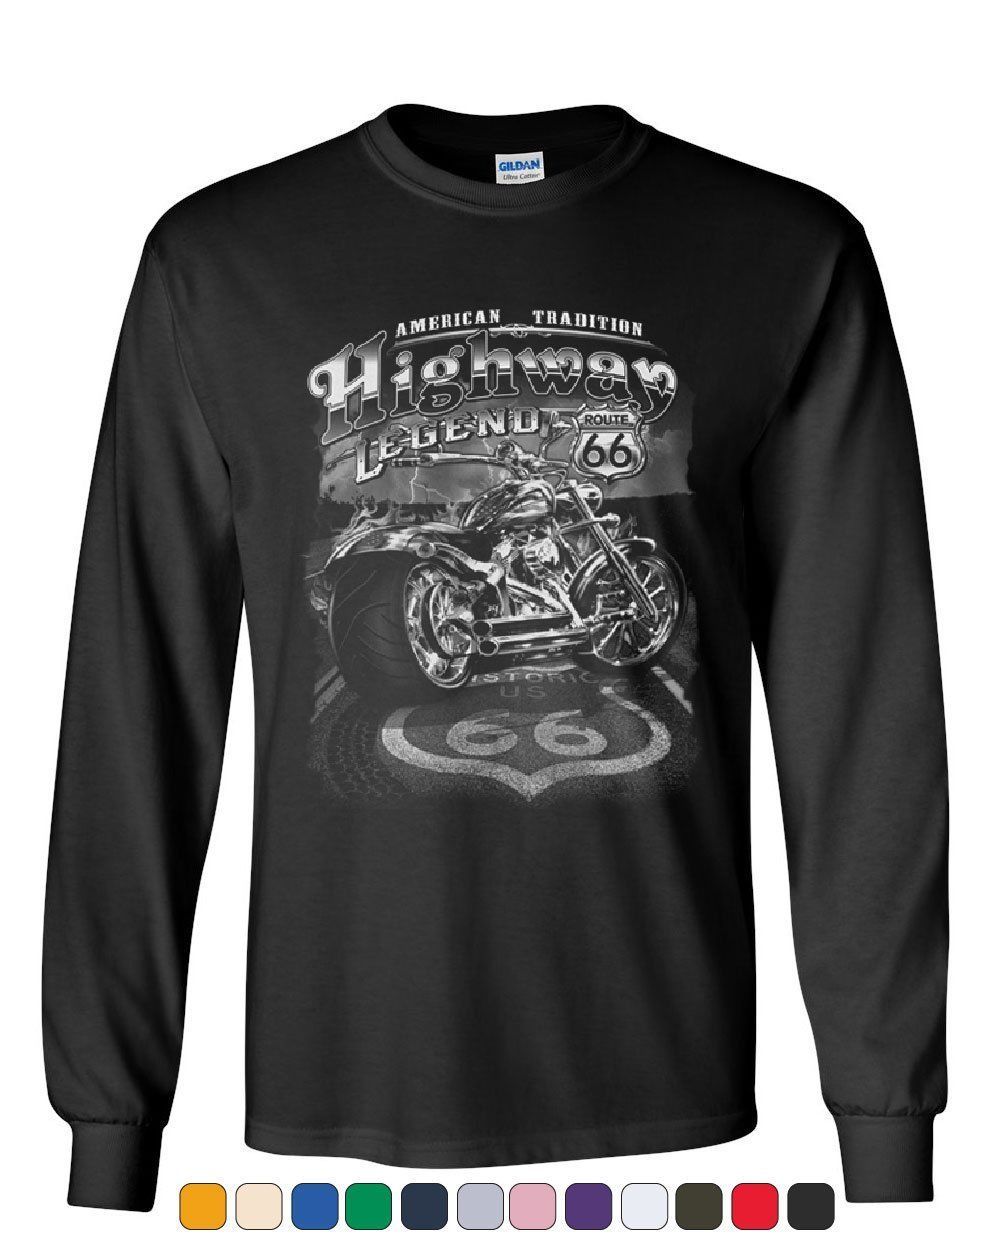 Highway Legend Route 66 Long Sleeve T-Shirt Biker American Tradition Chopper Tee